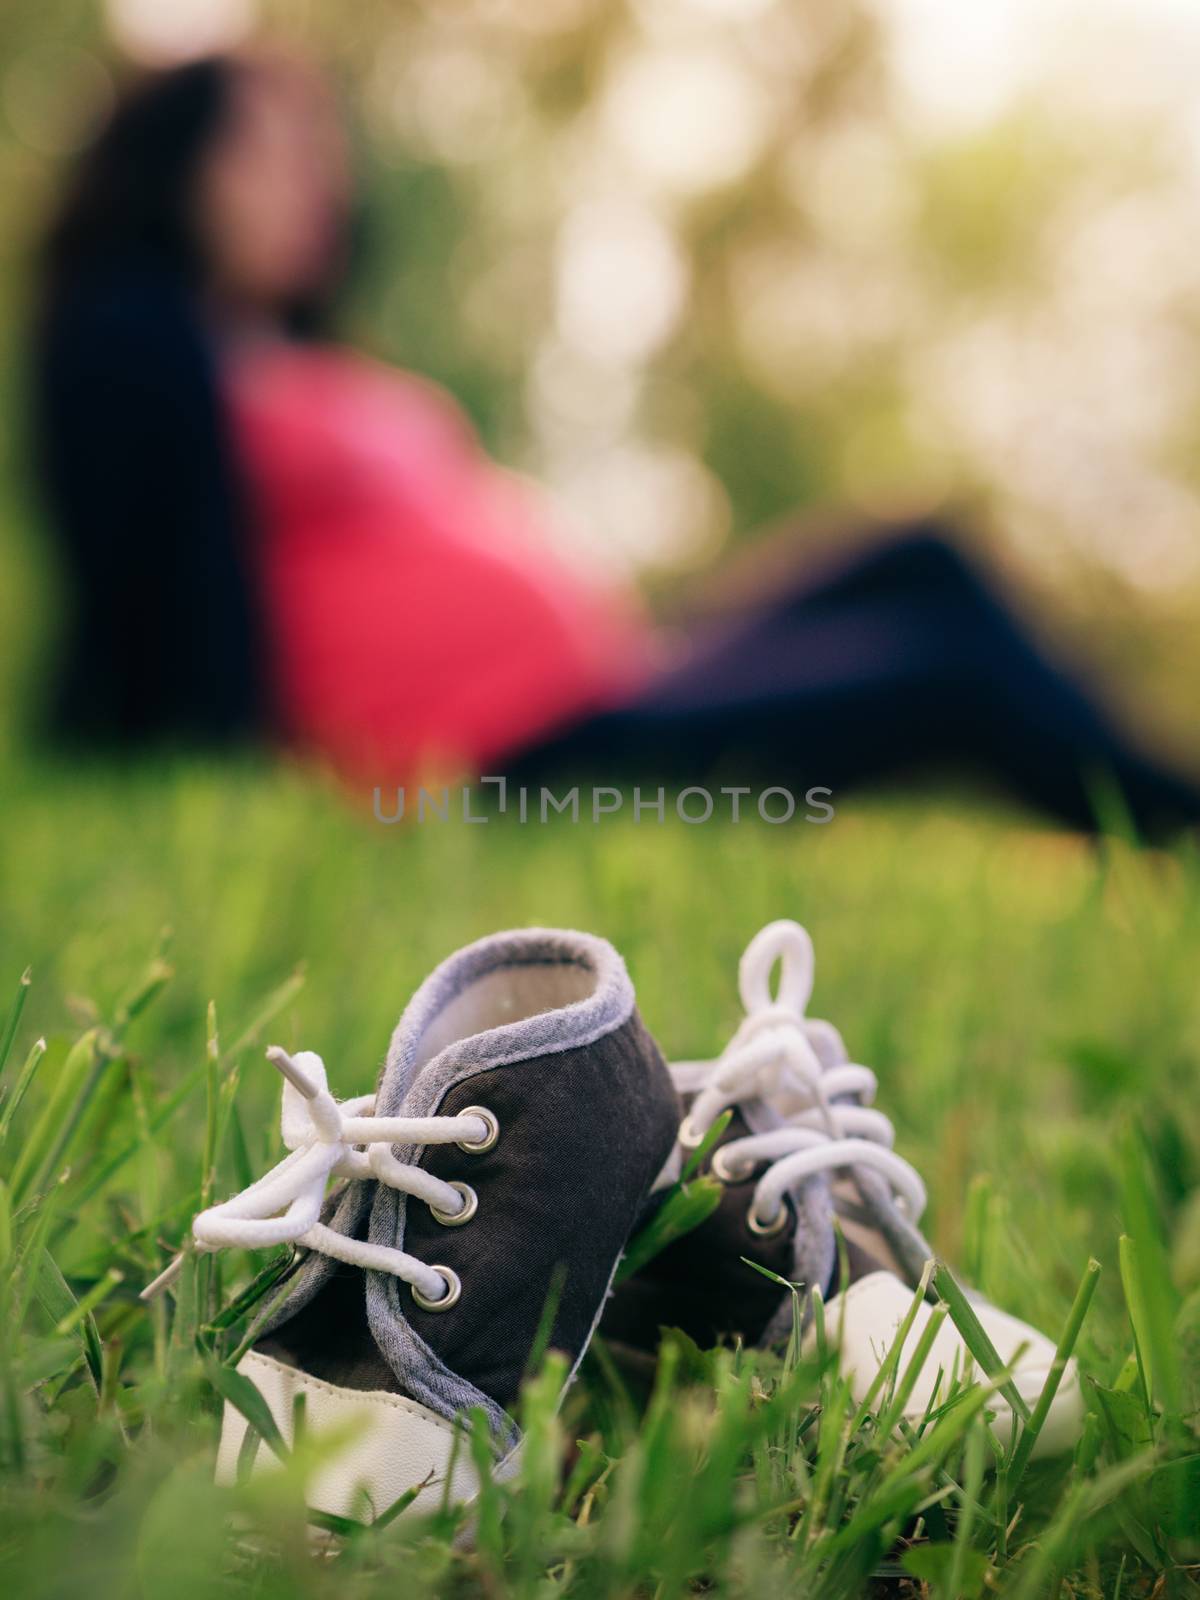 little shoes as pregnancy concept by fascinadora